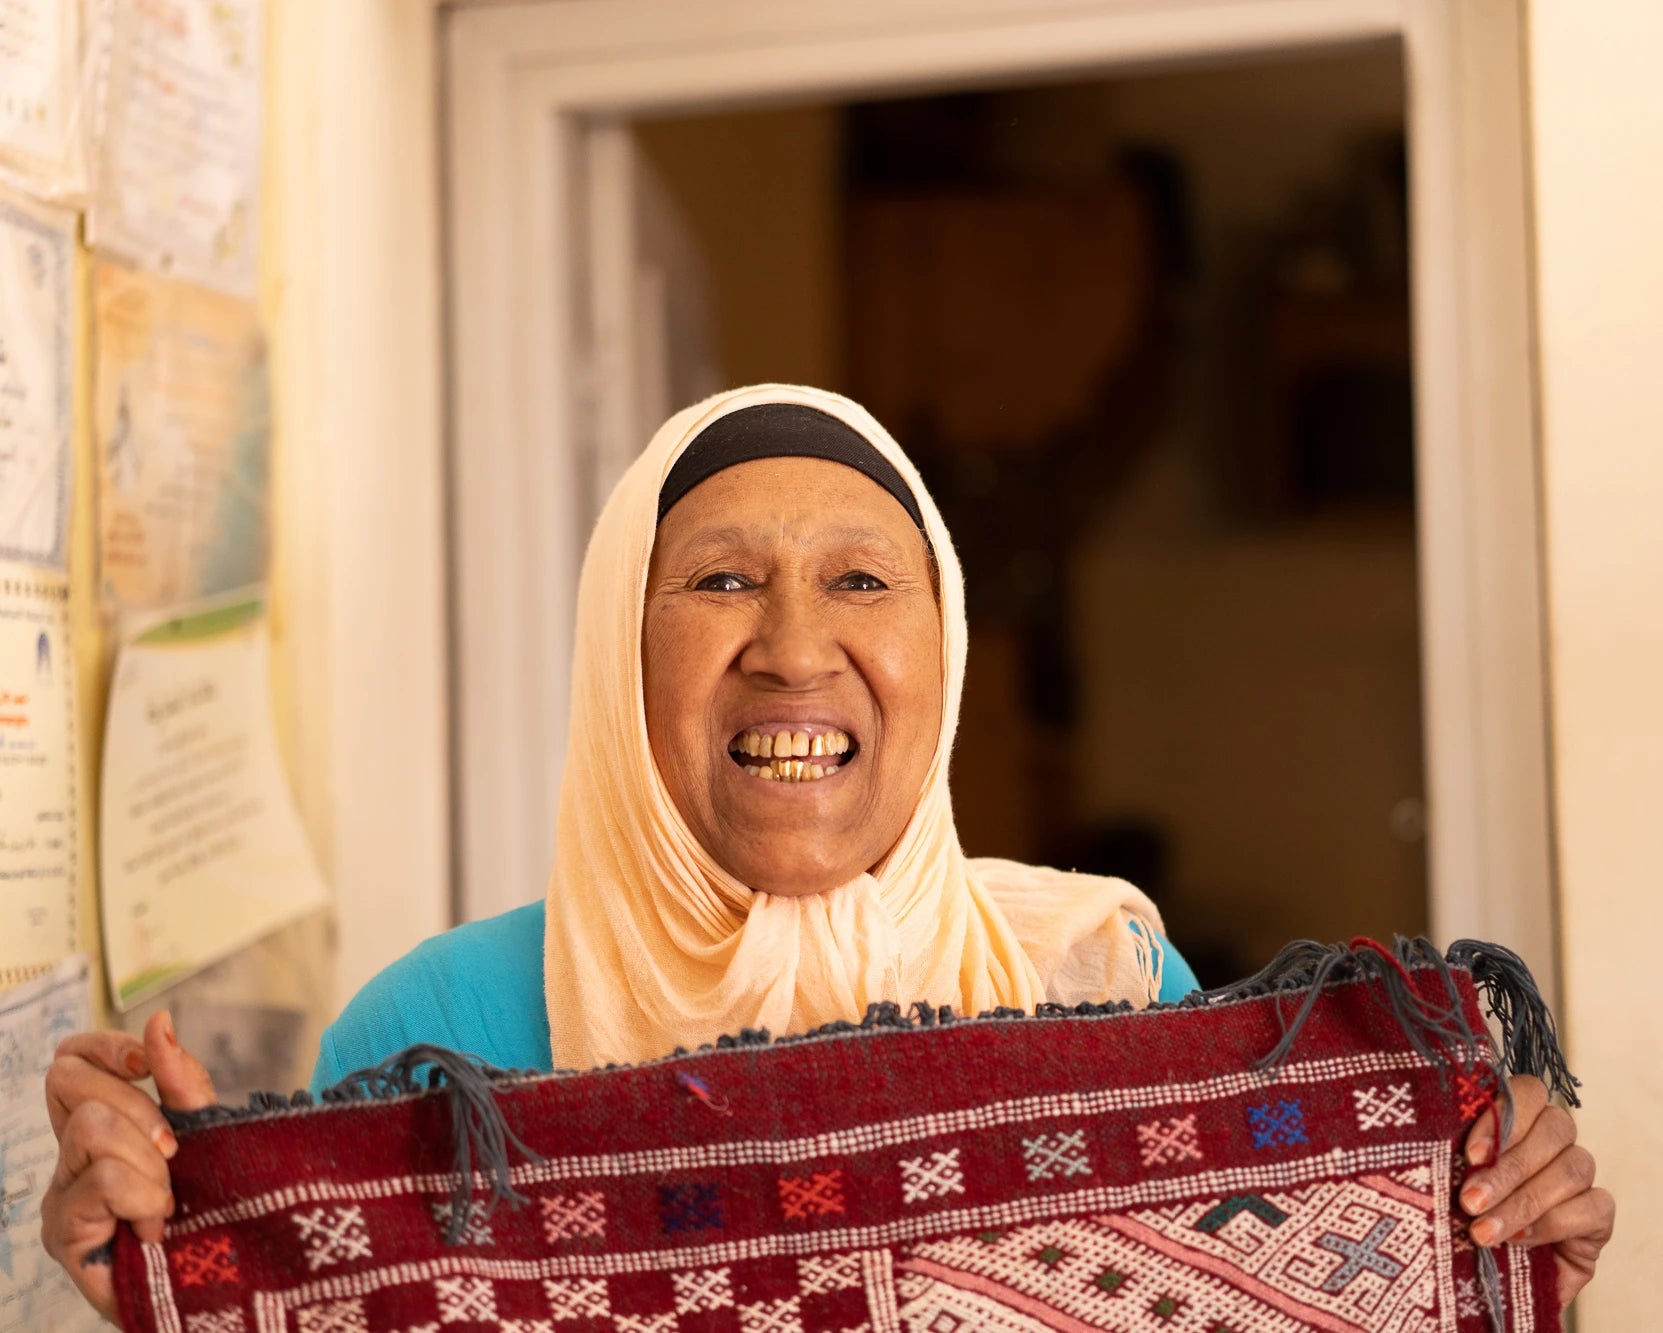 Berber women carpet weavers